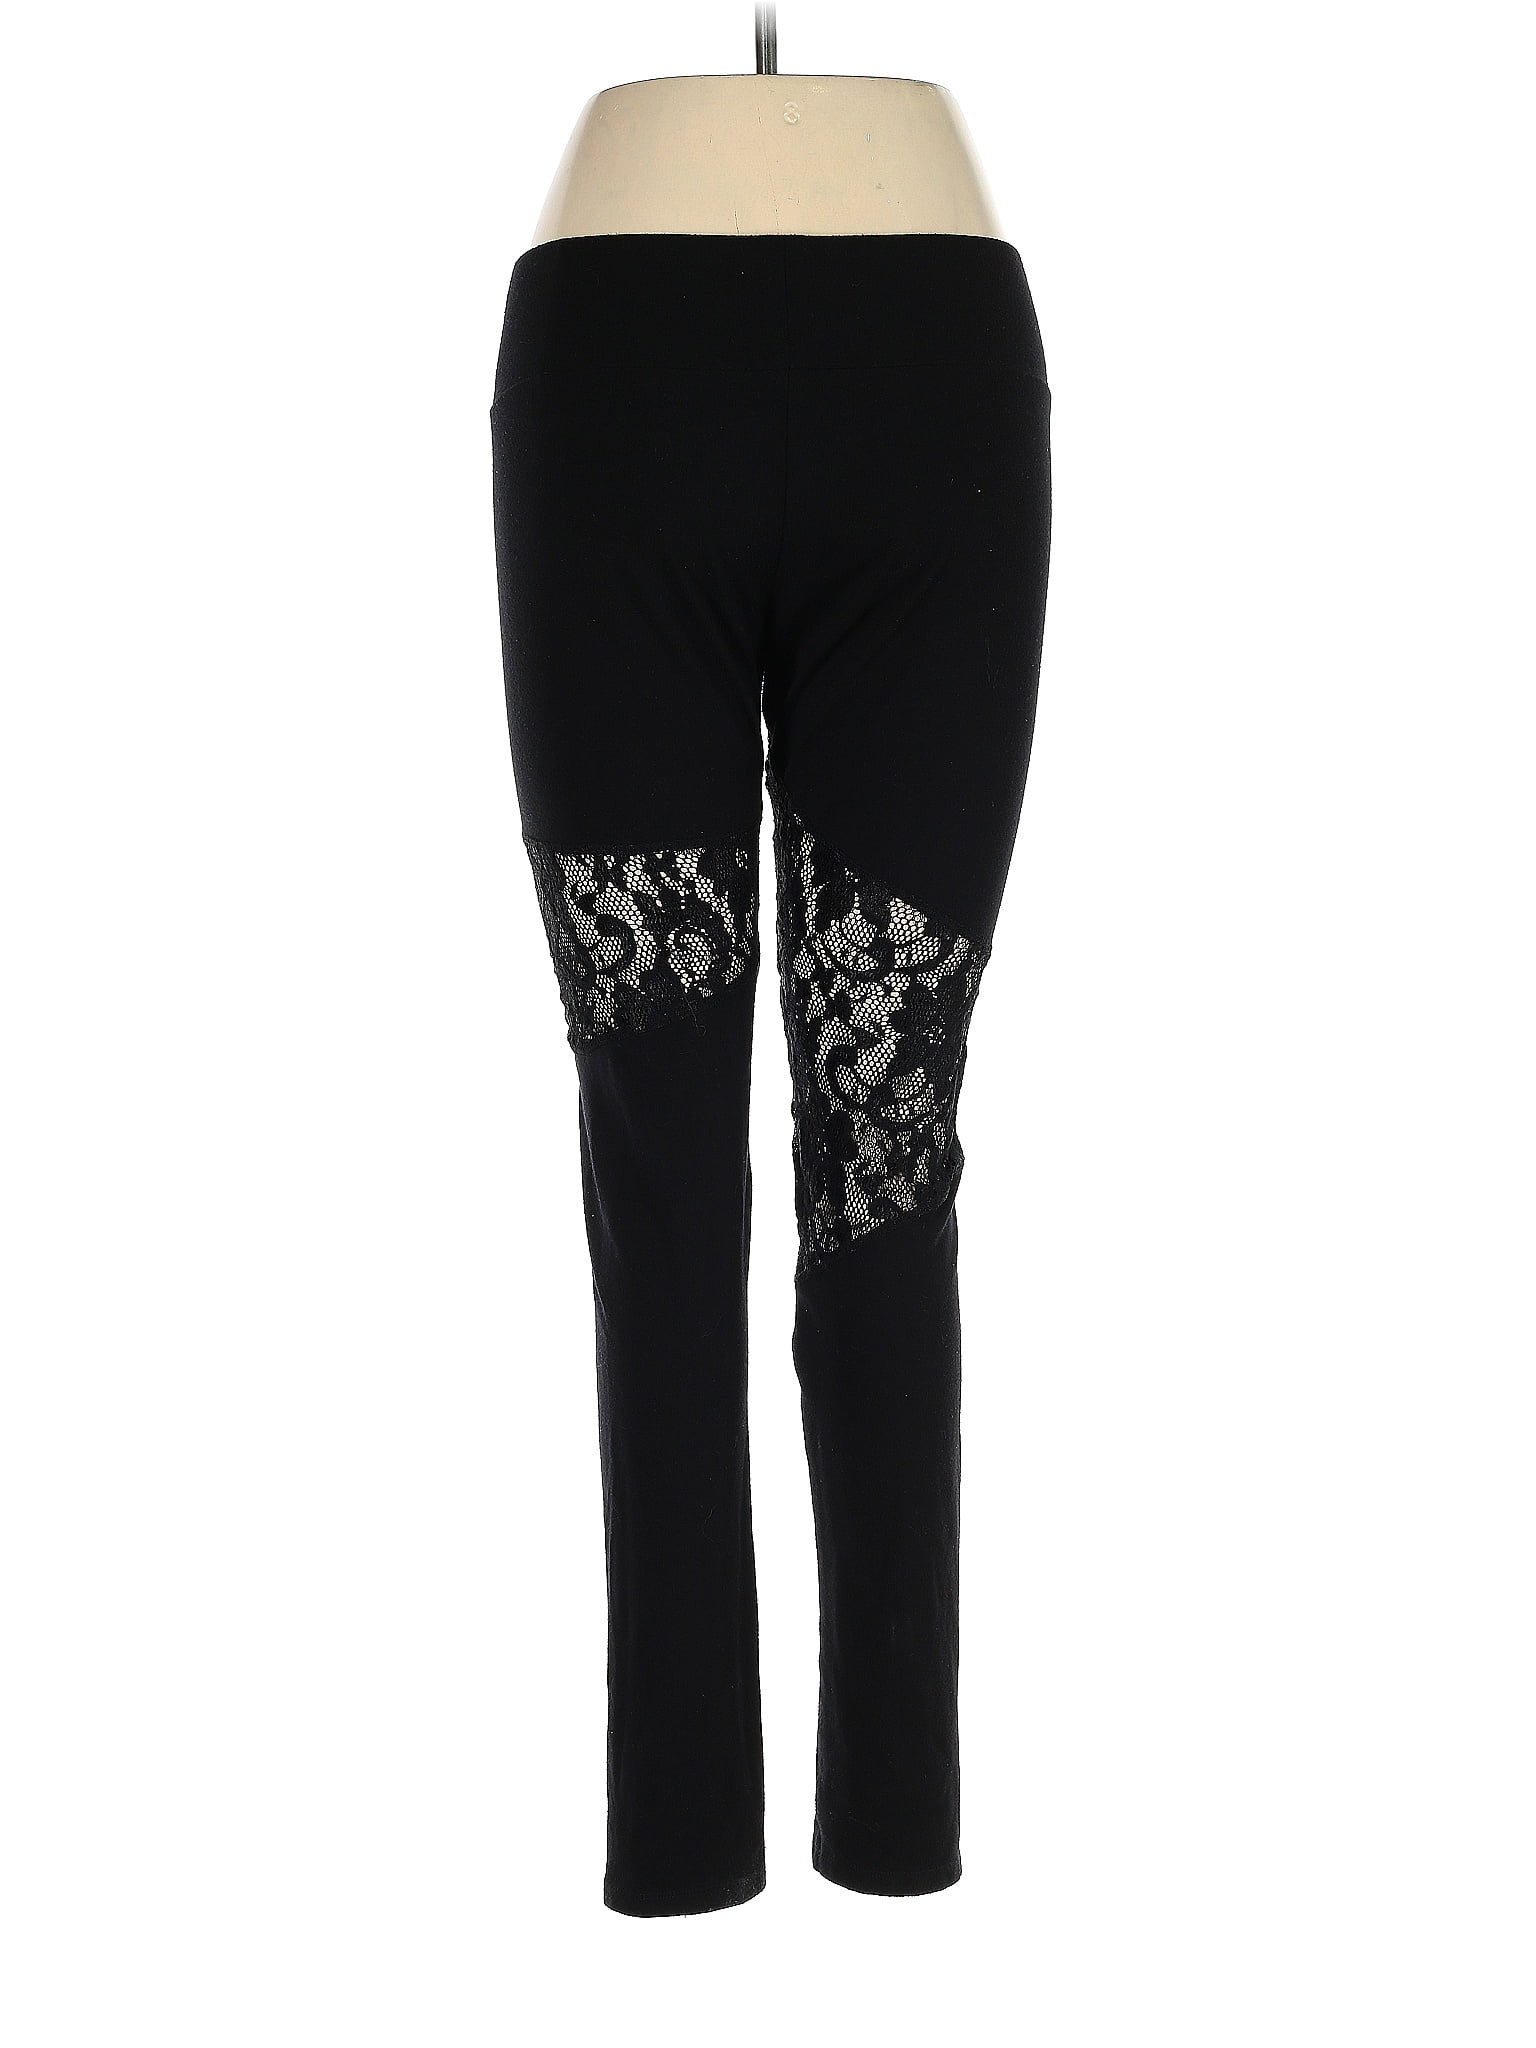 Adrienne Vittadini Sport Women's XL Black Yoga Pants